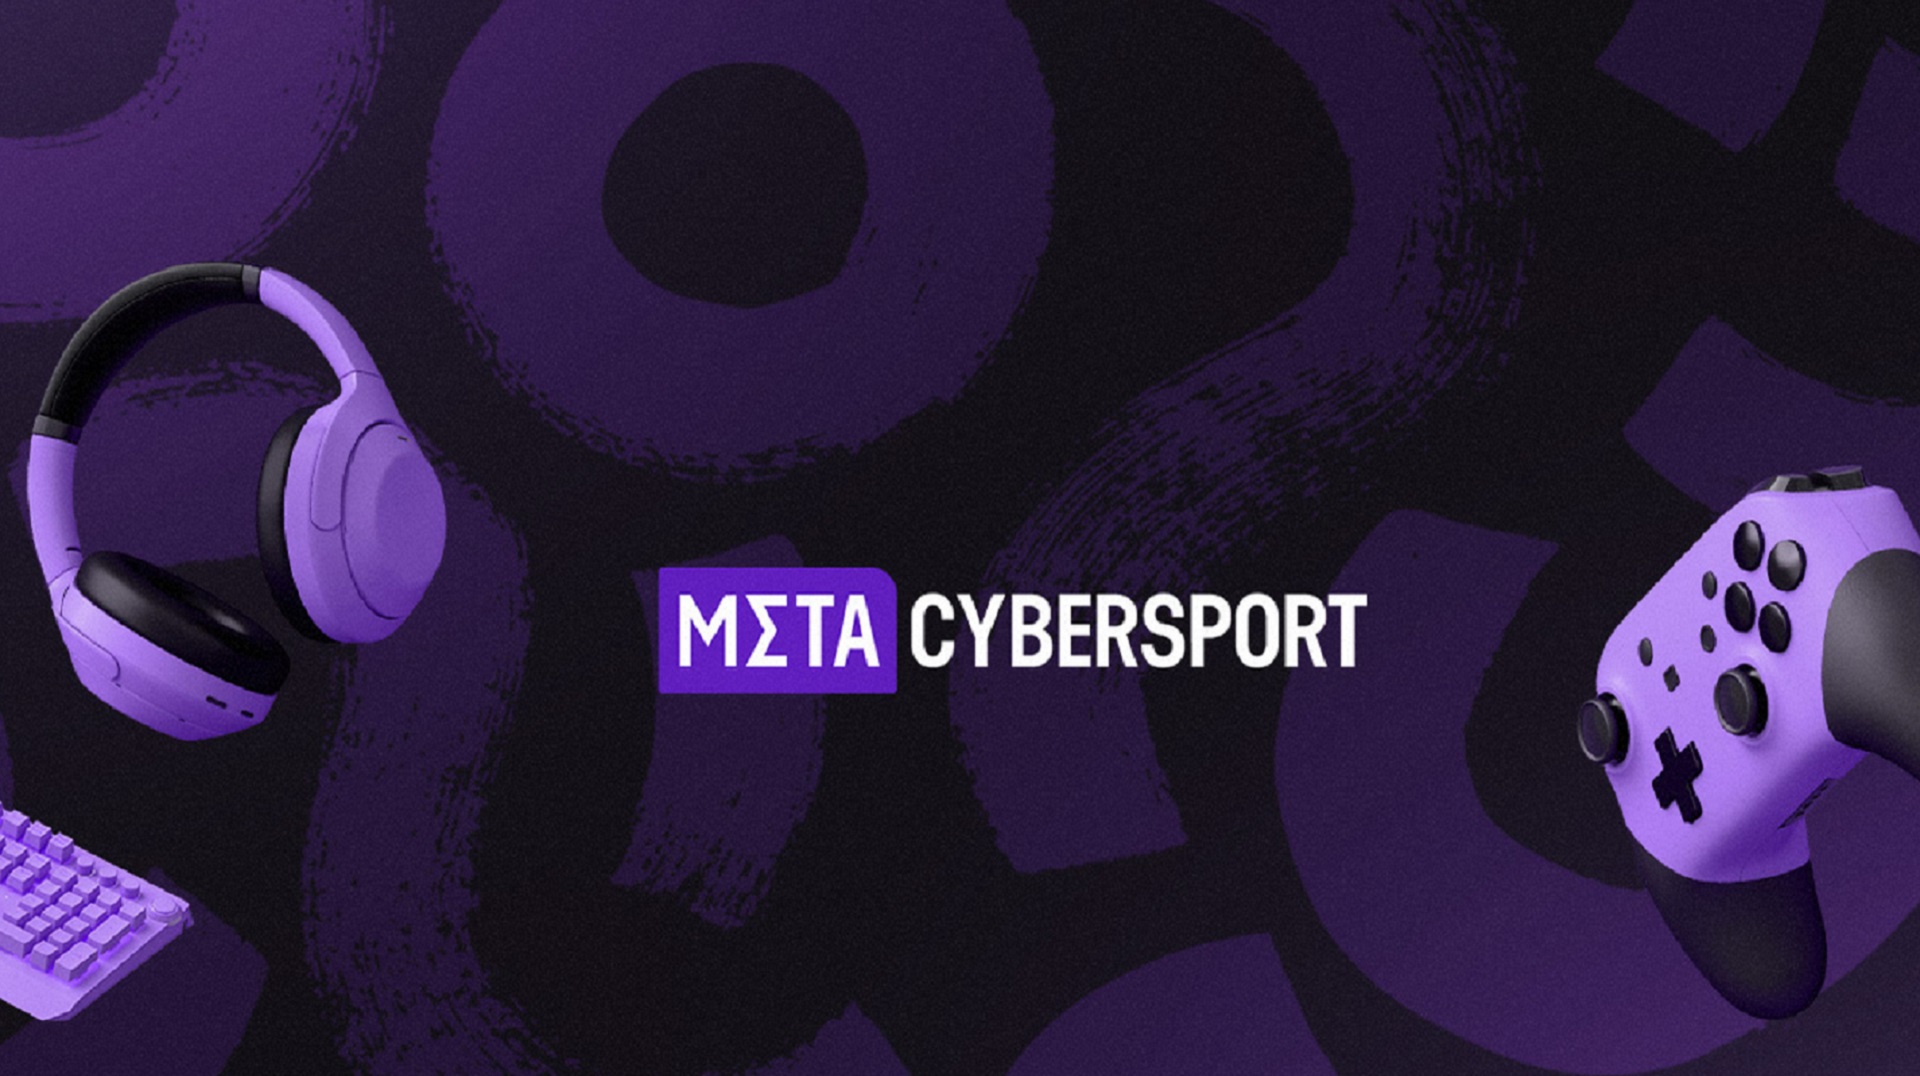 Вакансия: Cybersport.Metaratings.ru ищет авторов текстов